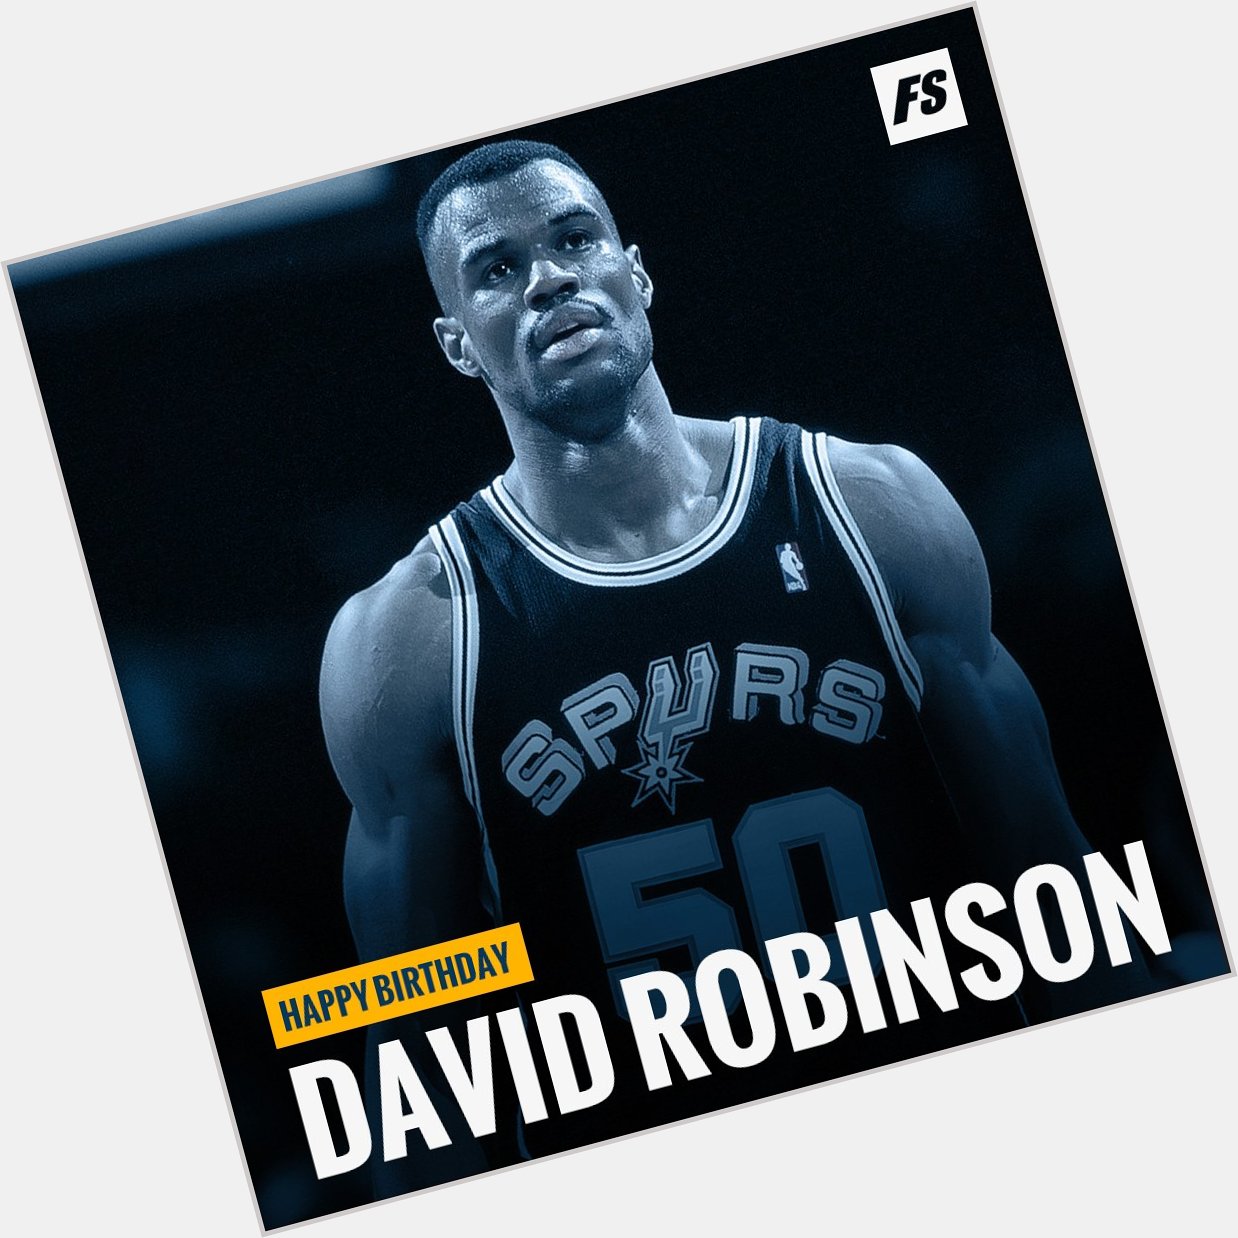 Happy birthday to former center for the San Antonio Spurs - David Robinson!  